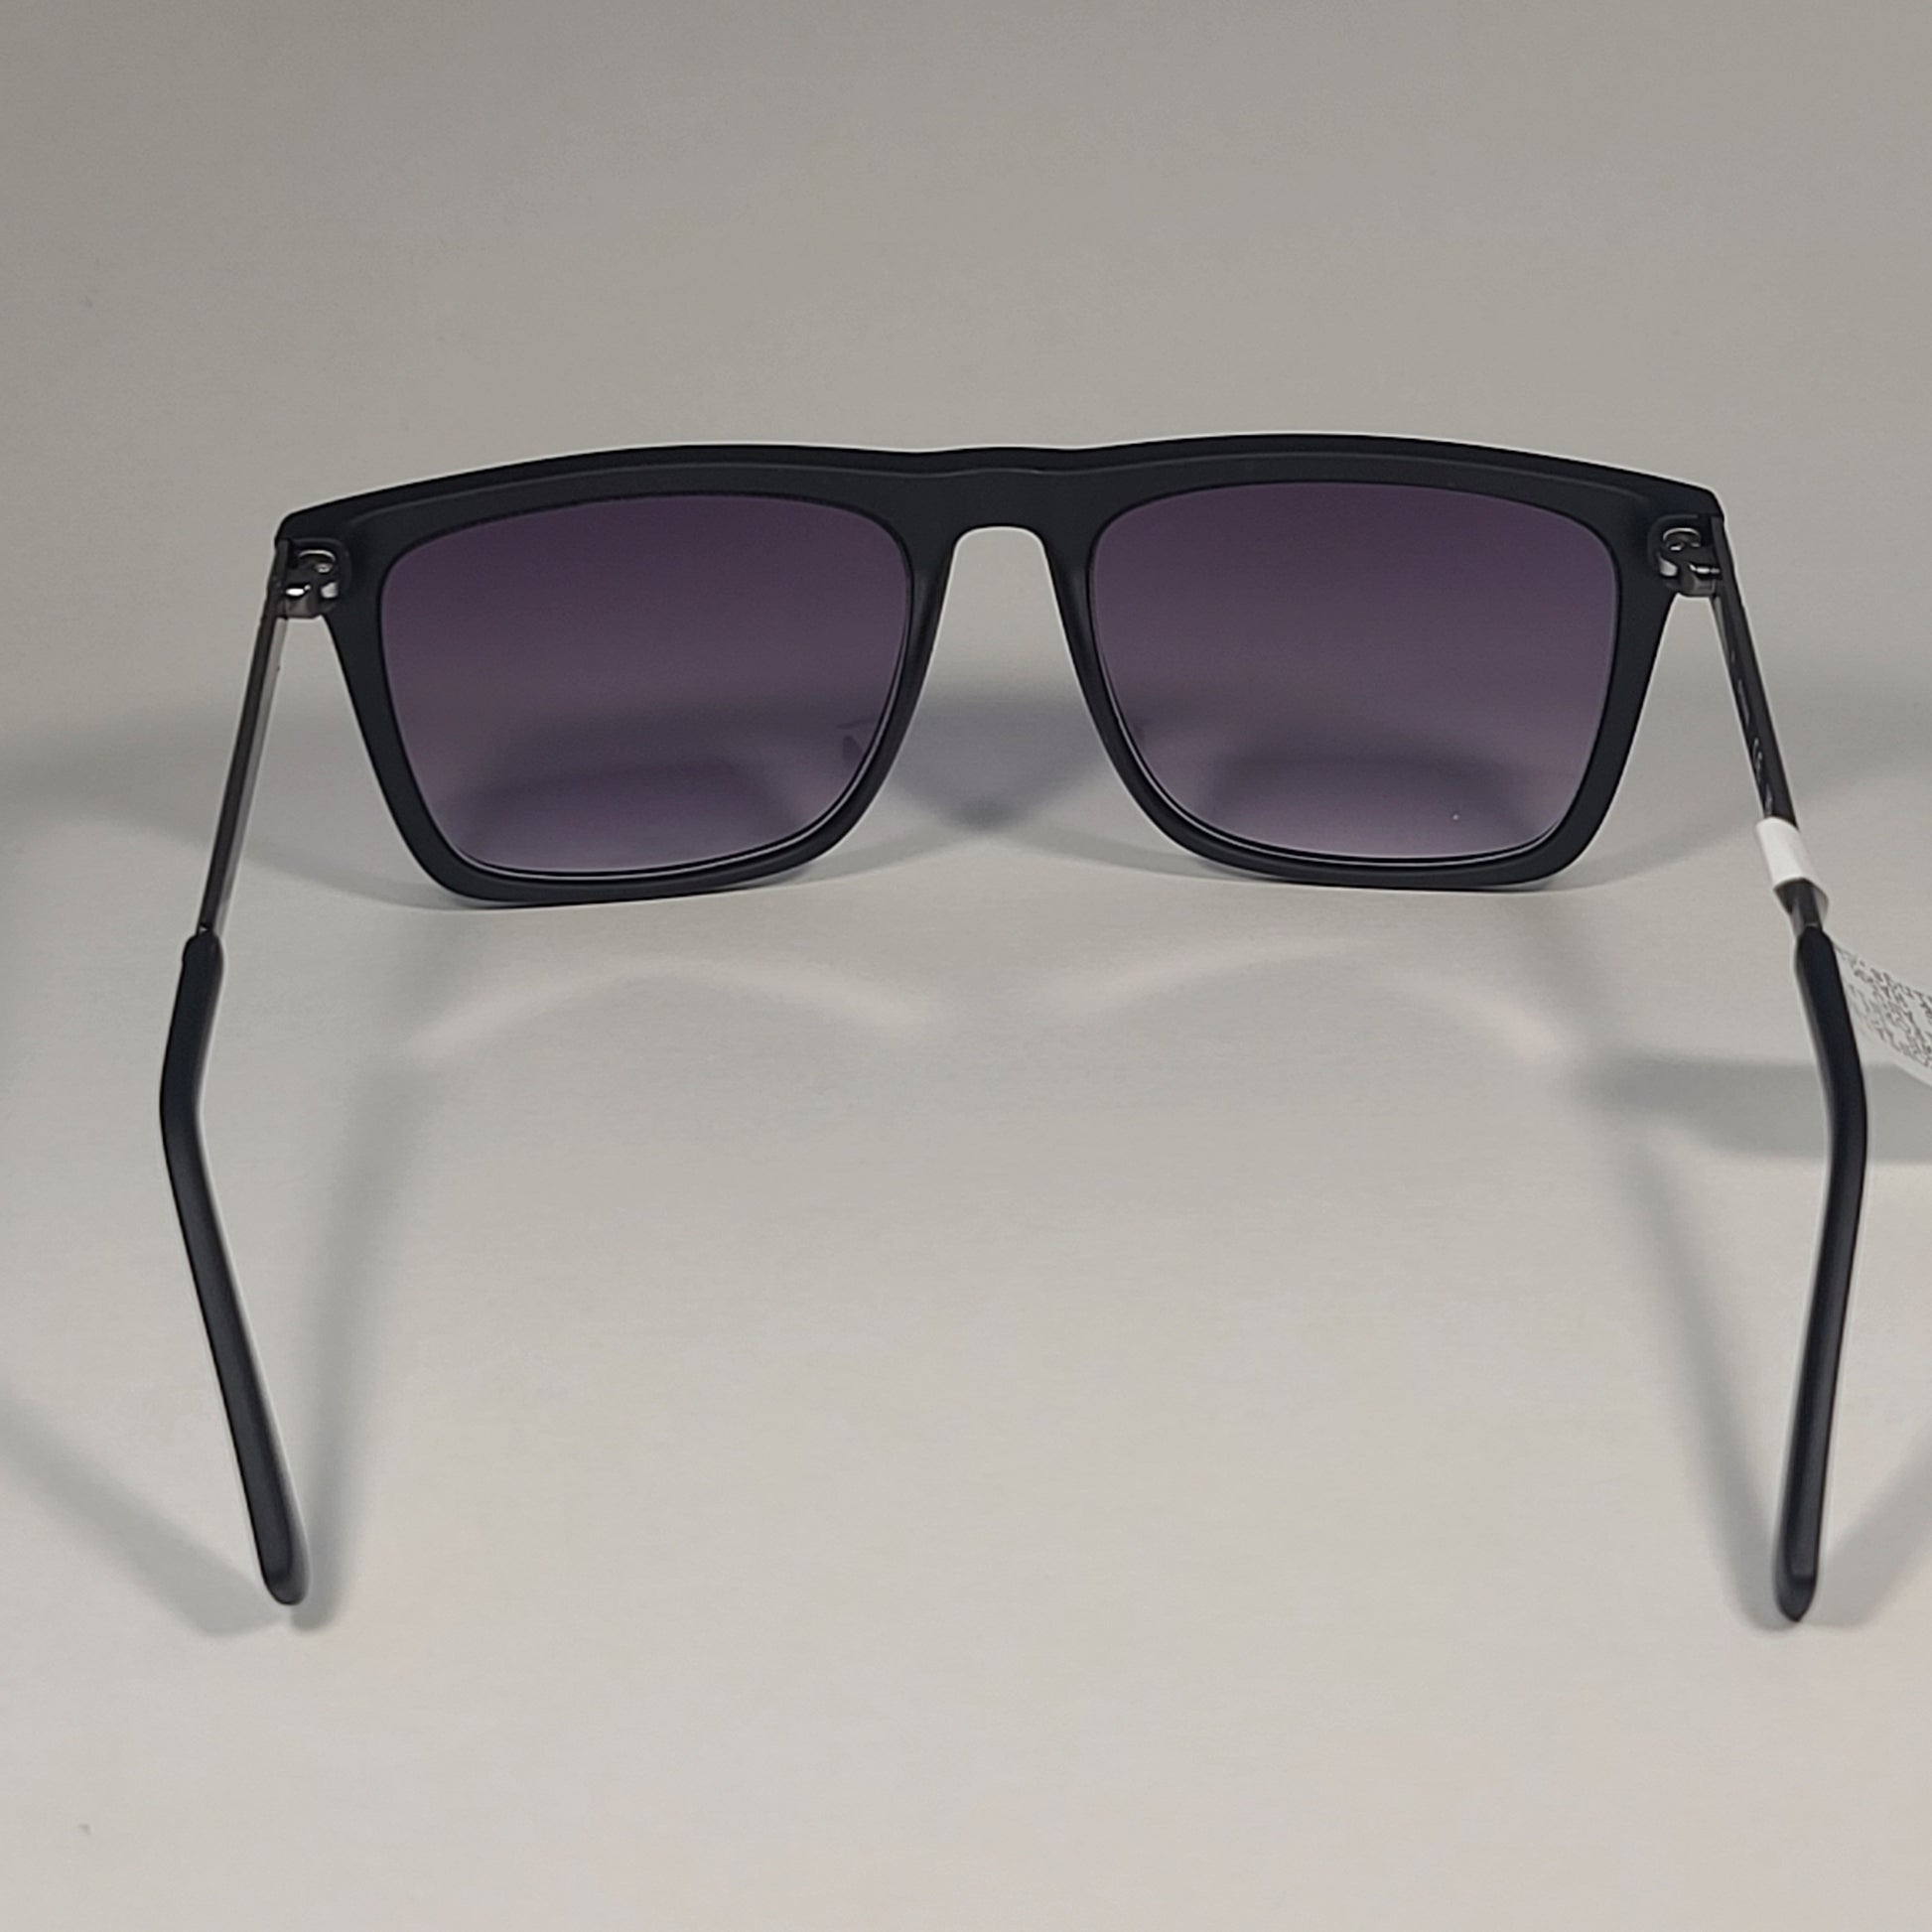 Guess Flat Top Square Sunglasses Matte Black Gunmetal Smoke Lens GF0176 02B - Sunglasses